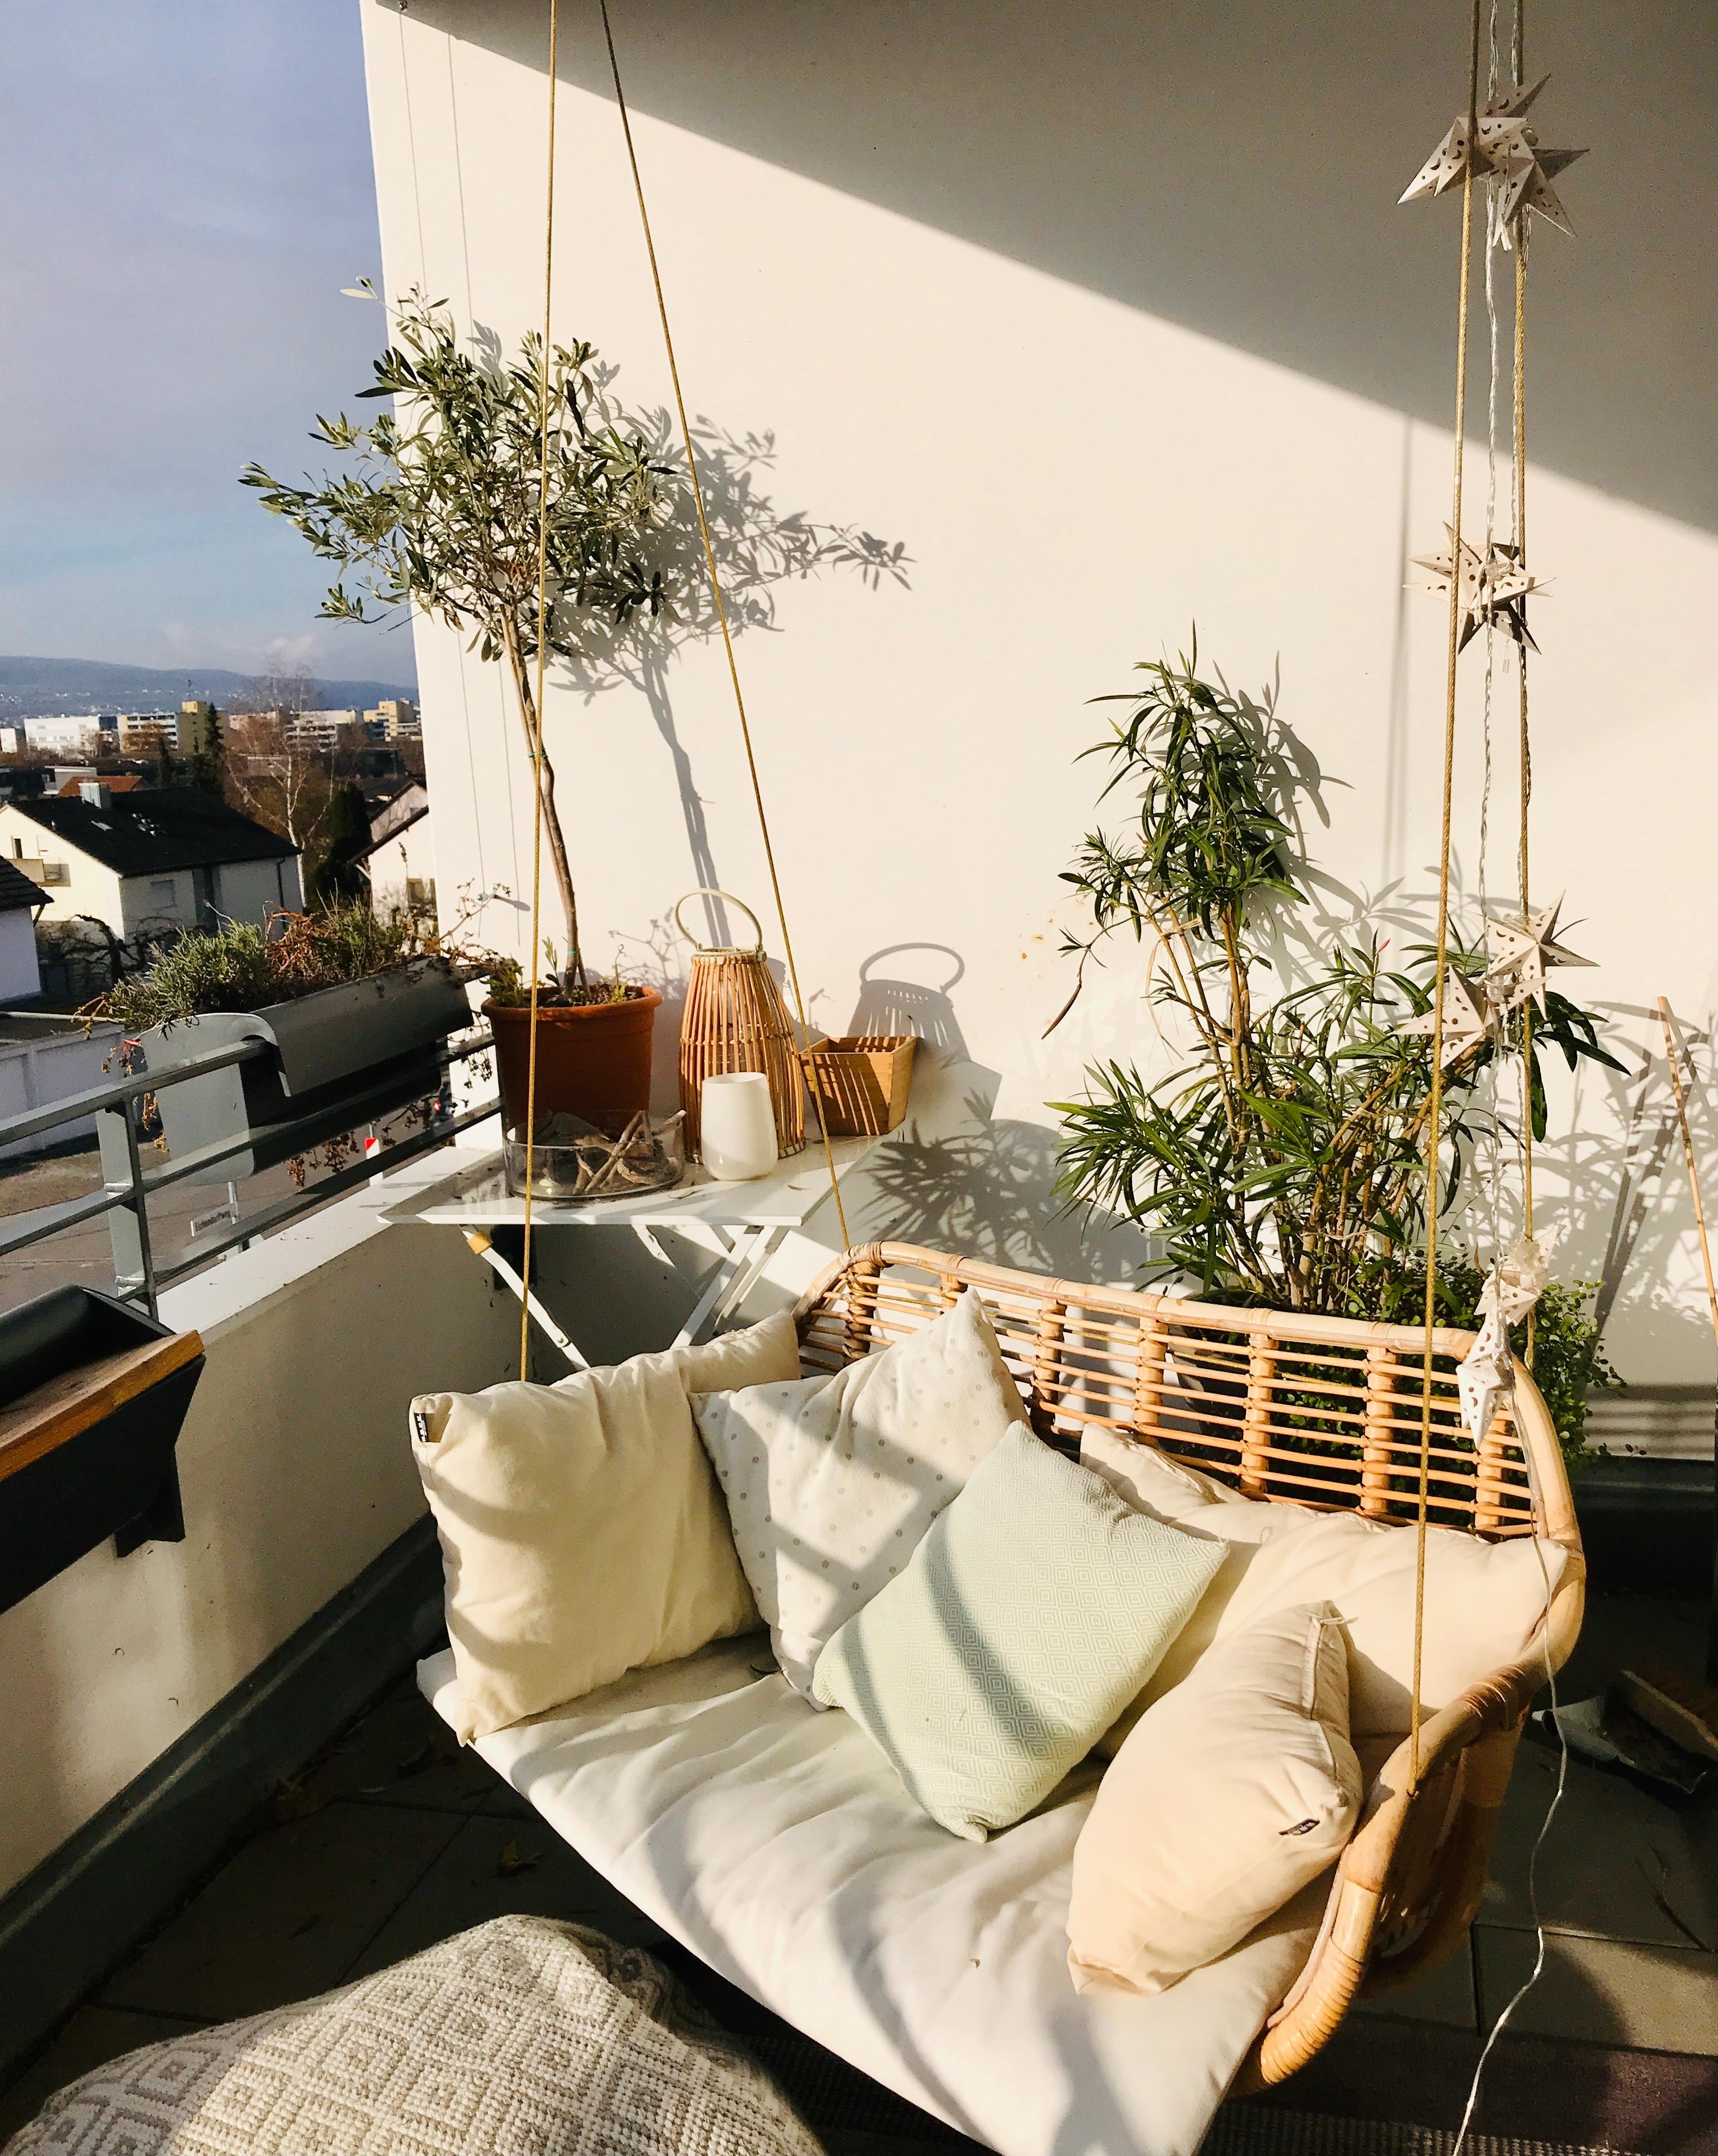 Sommerwinter
#balkon #balkonien